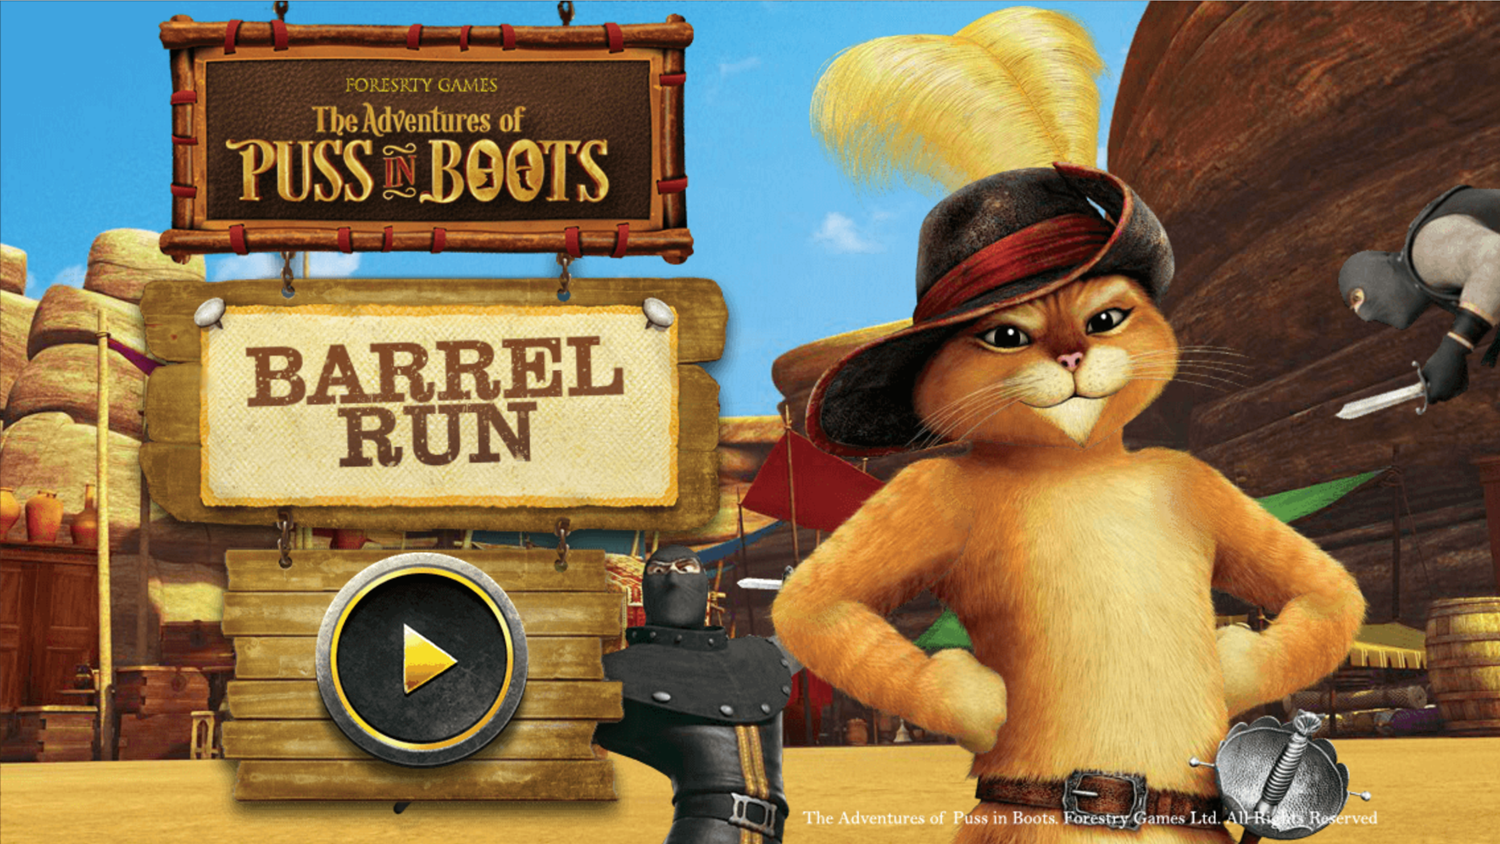 The Adventures of Puss in Boots Barrel Run Game Welcome Screen Screenshot.